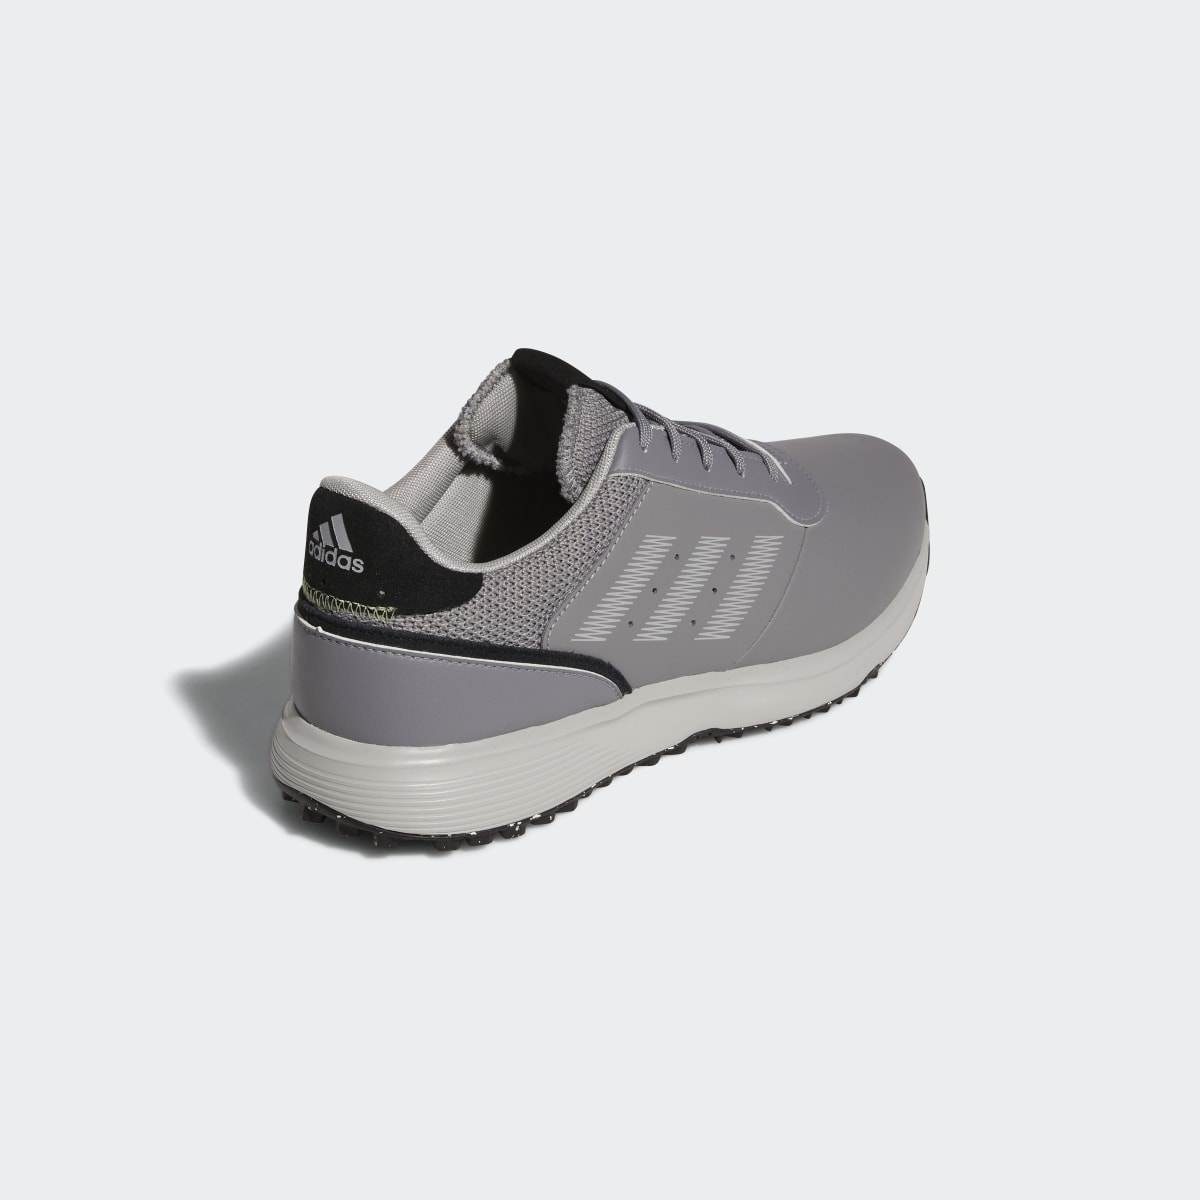 Adidas Zapatilla de golf S2G Spikeless Leather. 6